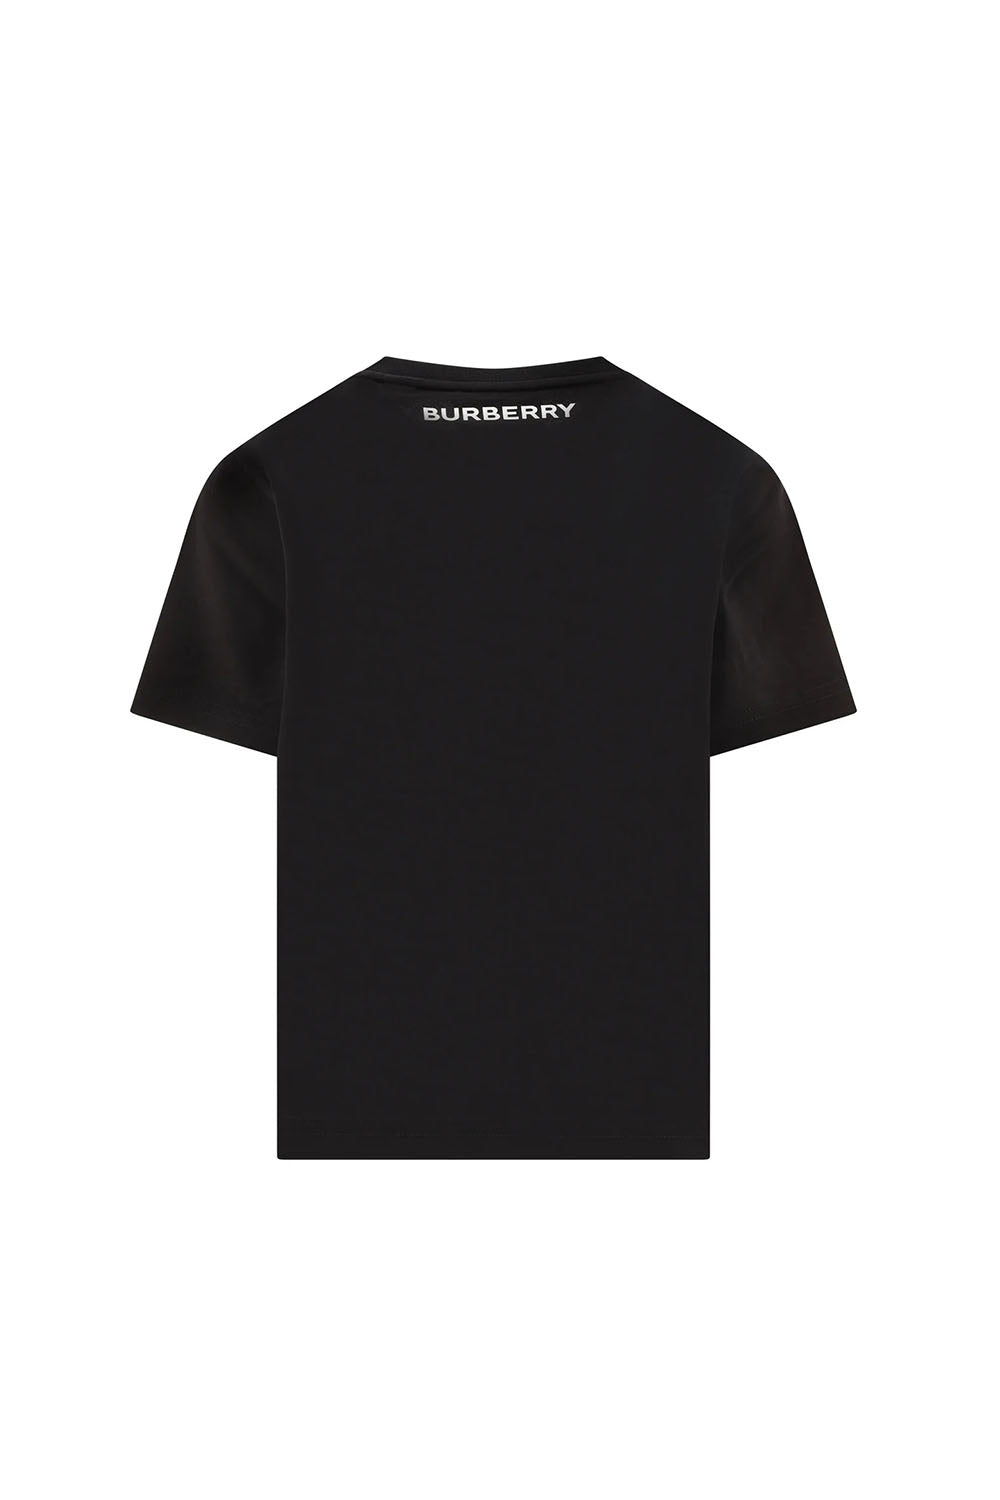 Jerseywear Cedar Check T-Shirt for Boys - Maison7